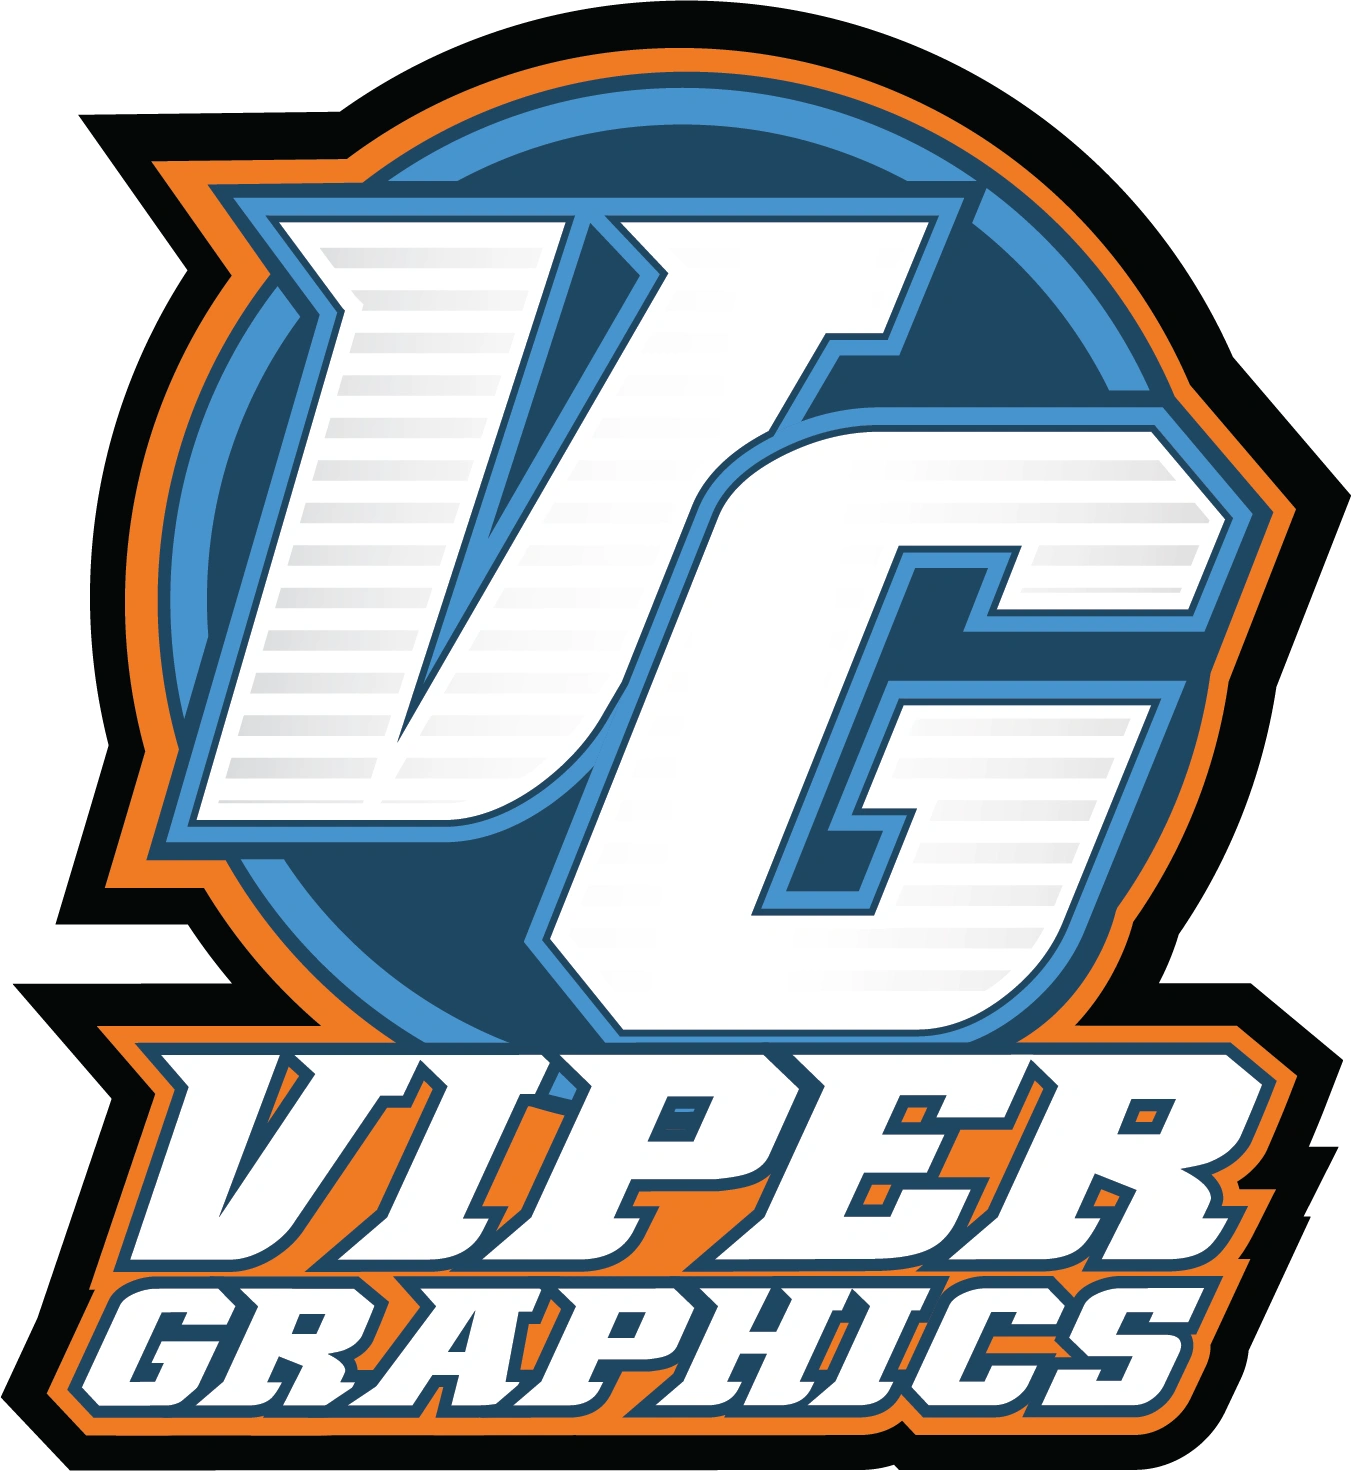 Viper Graphics branded logo